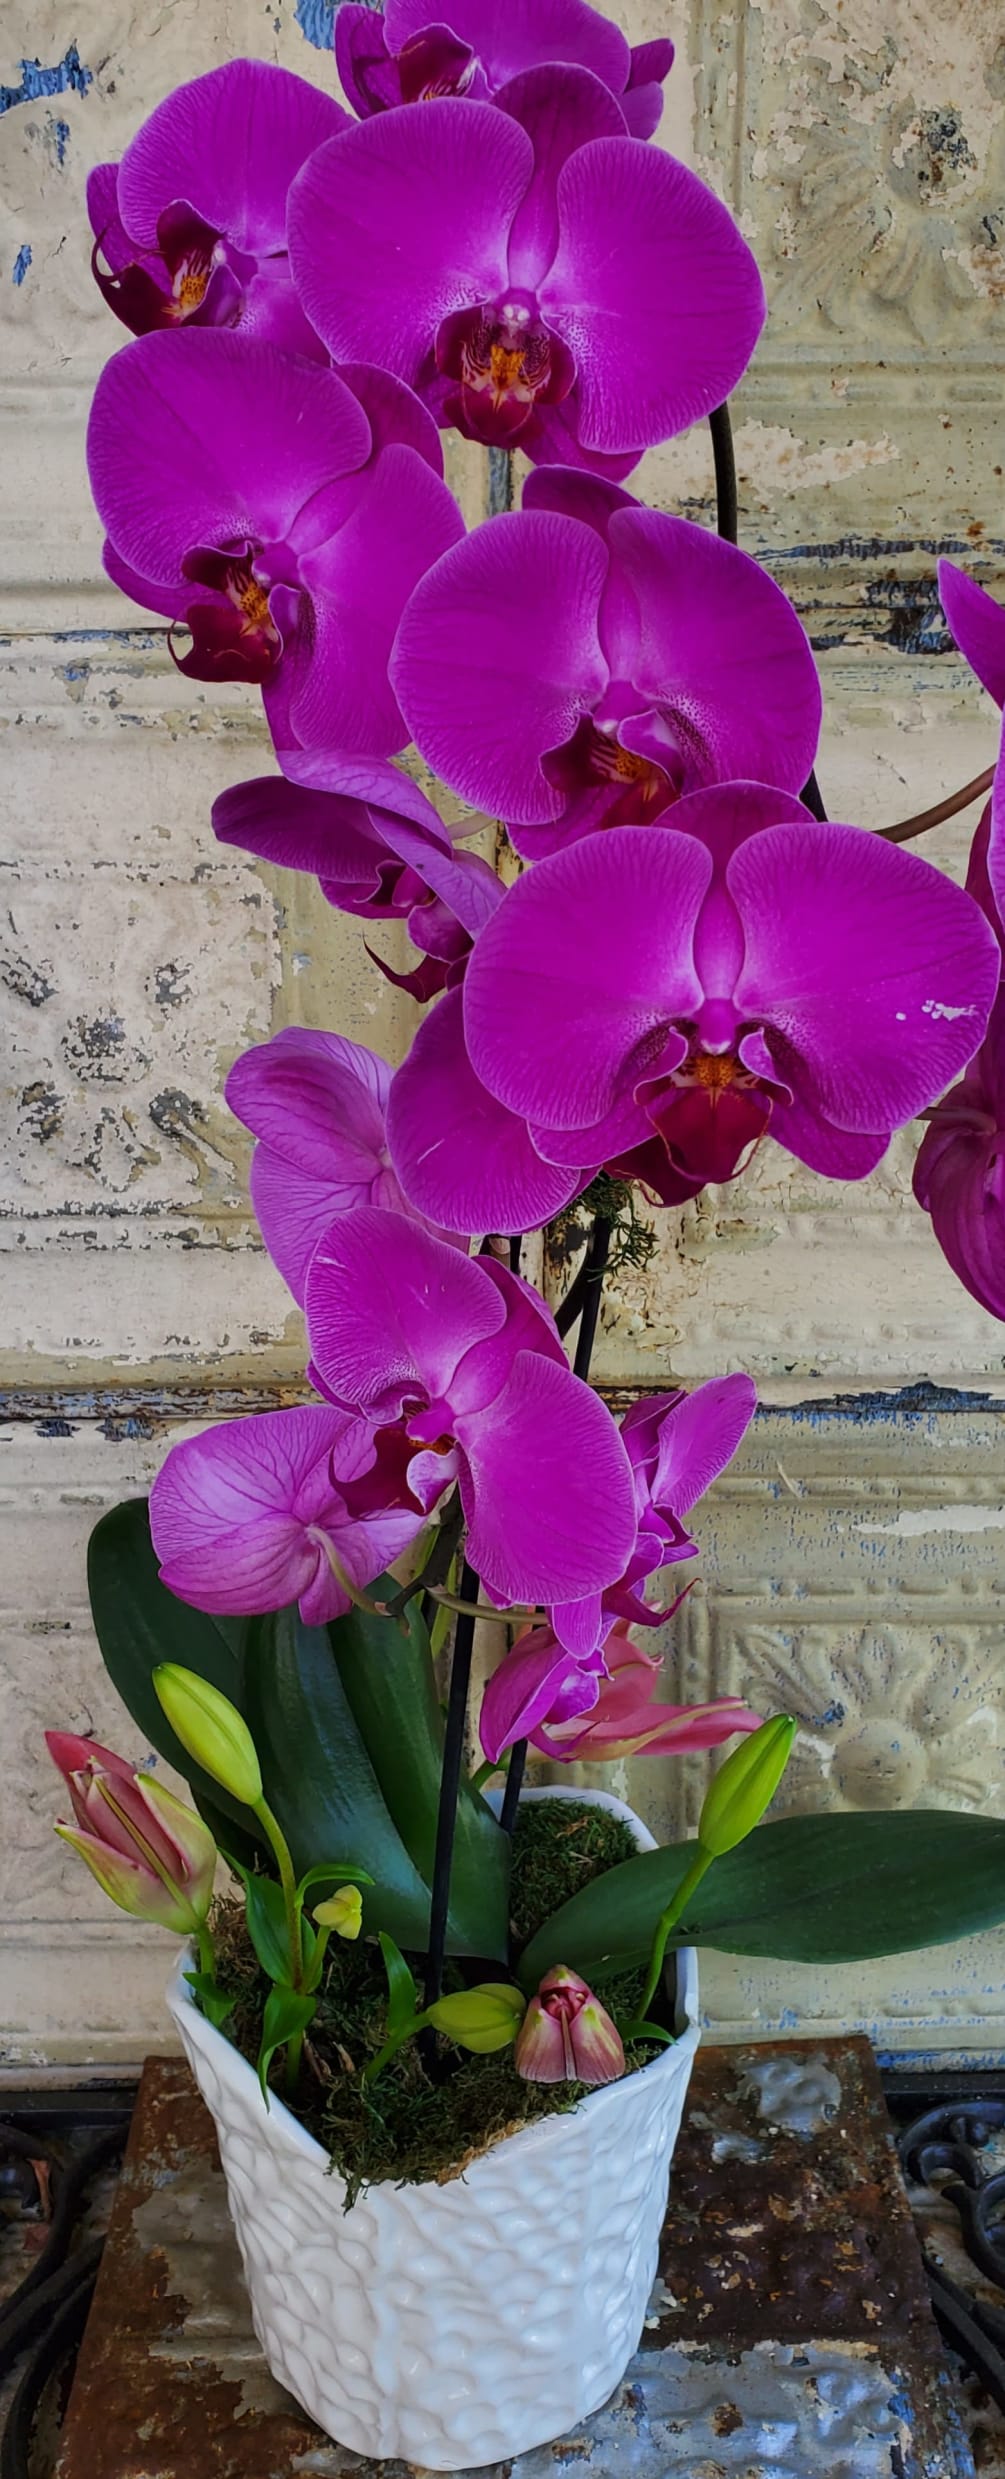 A beautiful display of purple Phalaenopsis Orchids.